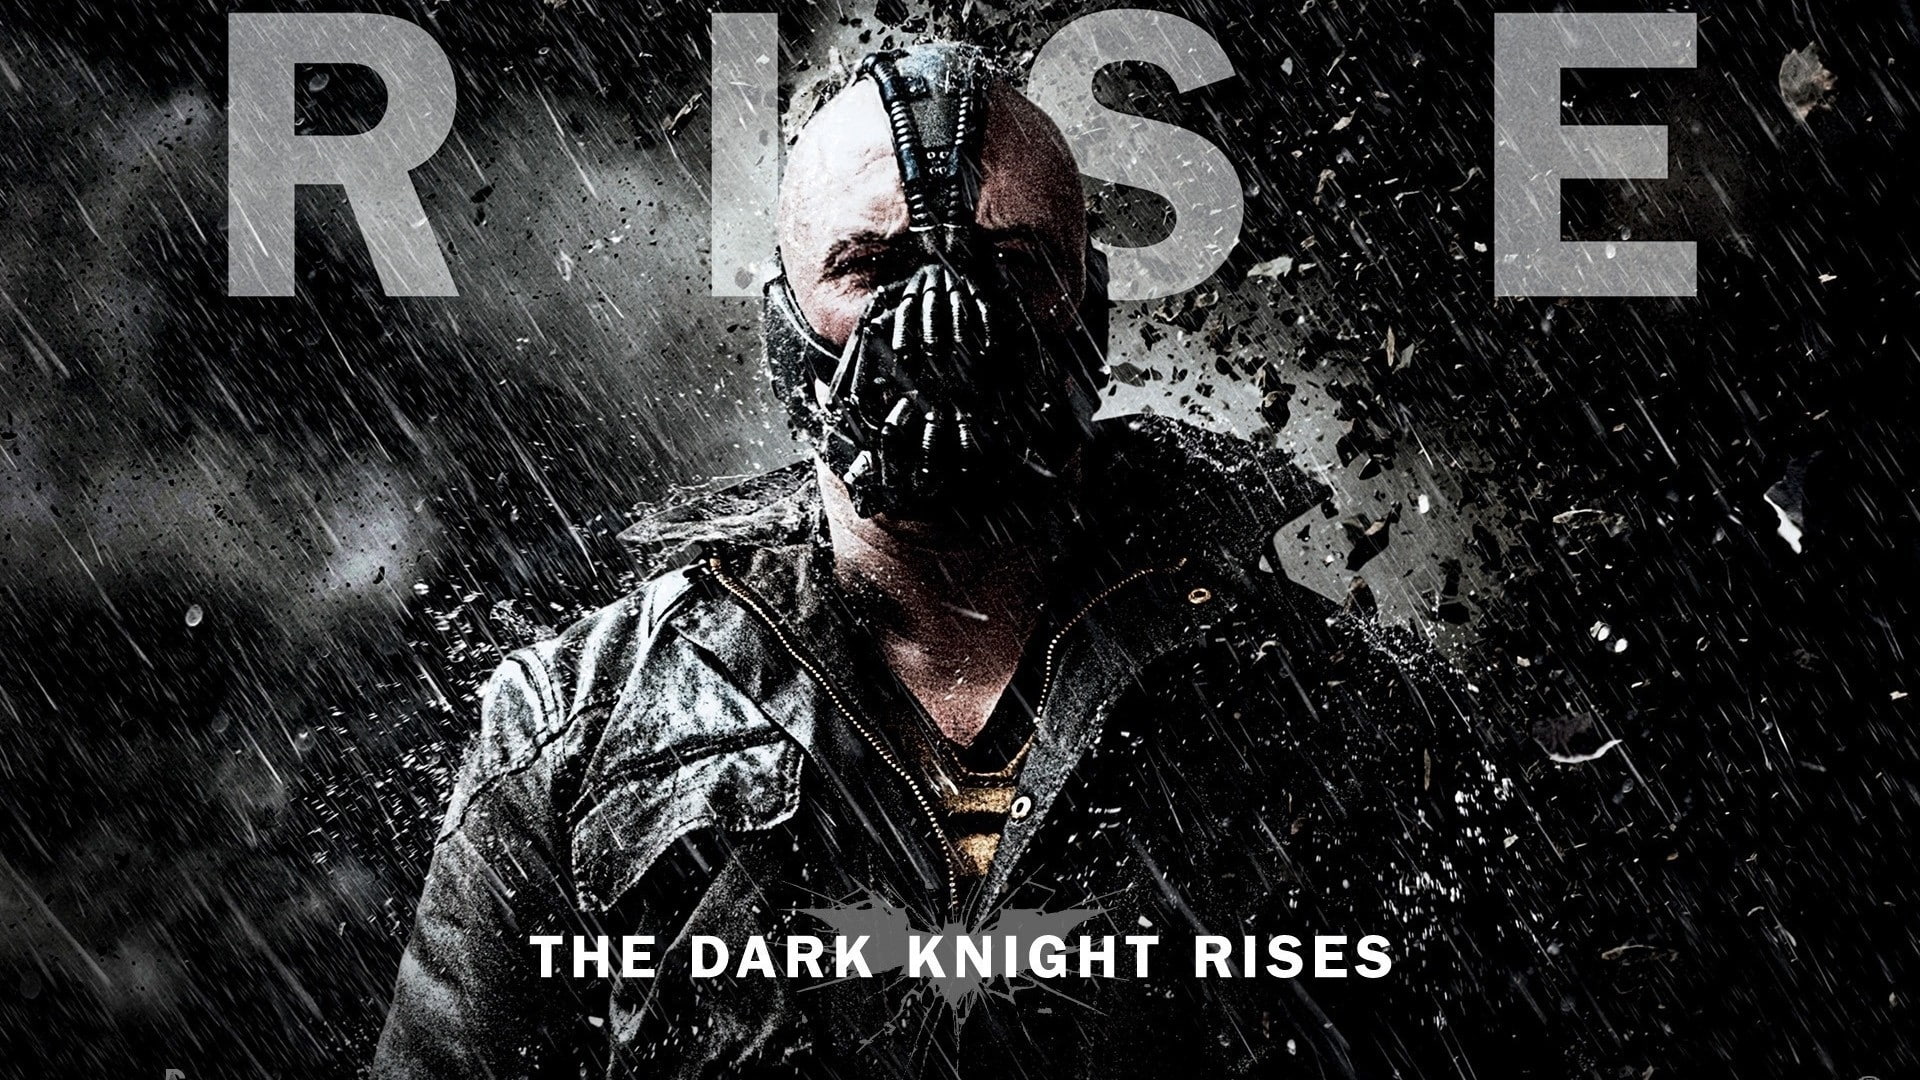 bane, Batman, Gas Masks, The Dark Knight Rises, Tom Hardy, one person